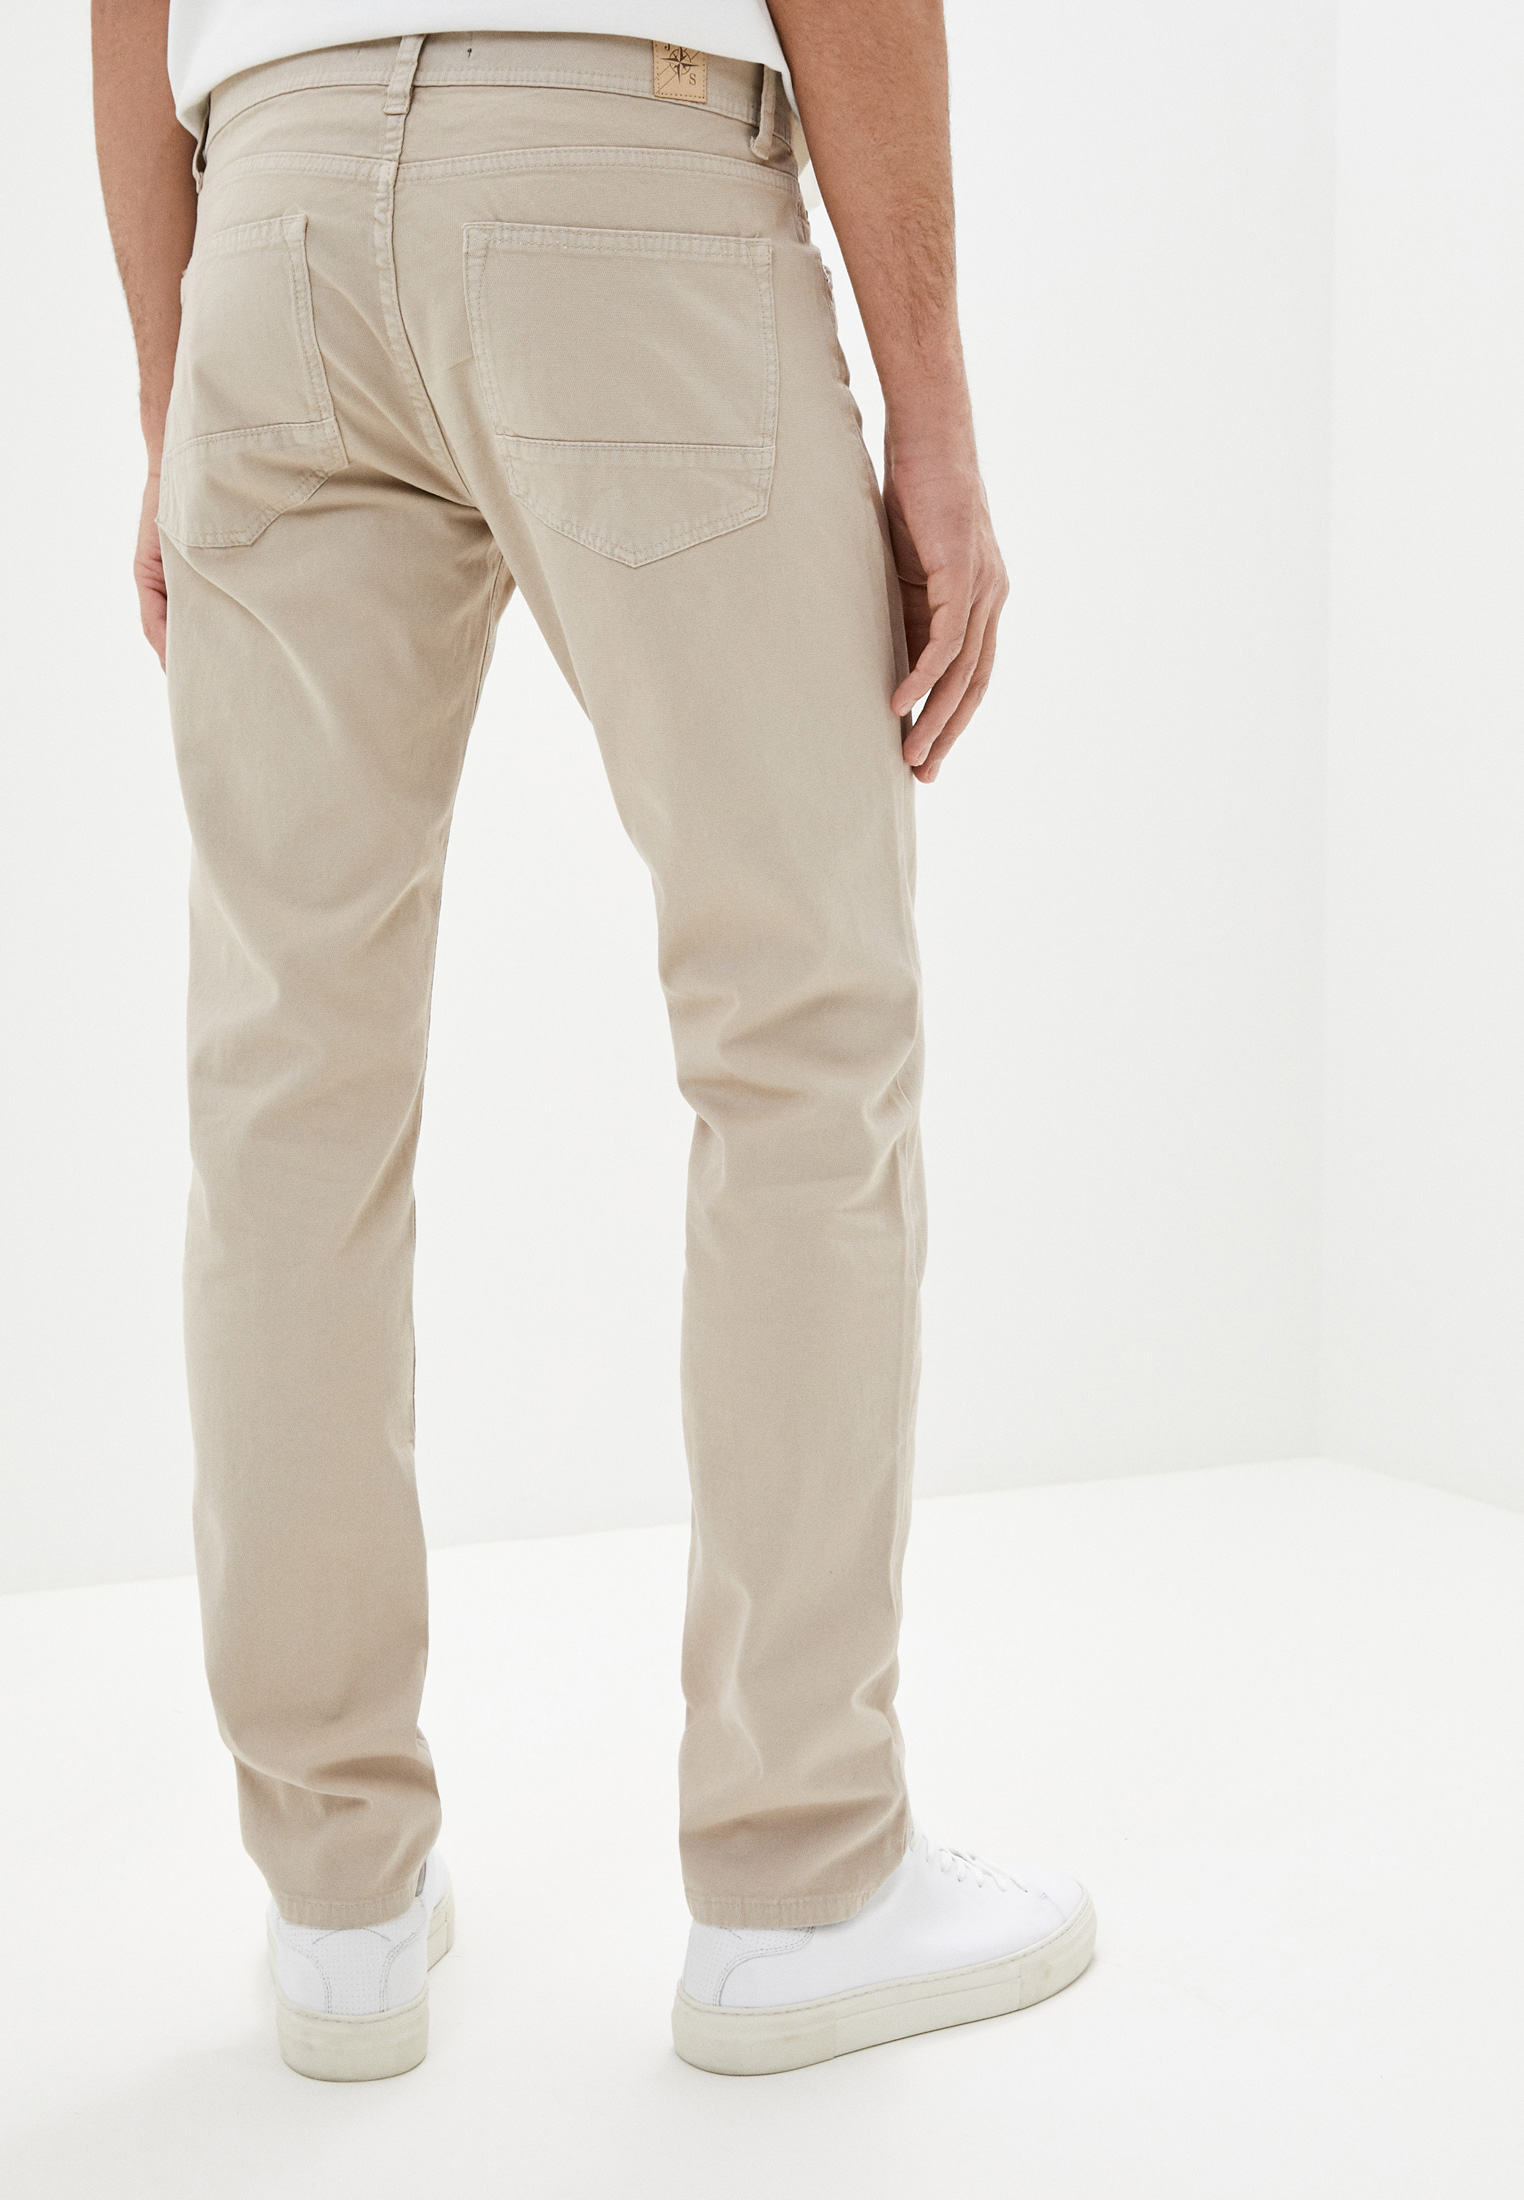 Мужские повседневные брюки JIMMY SANDERS (Джимми Сандерс) 19W PM11002 BEIGE: изображение 3